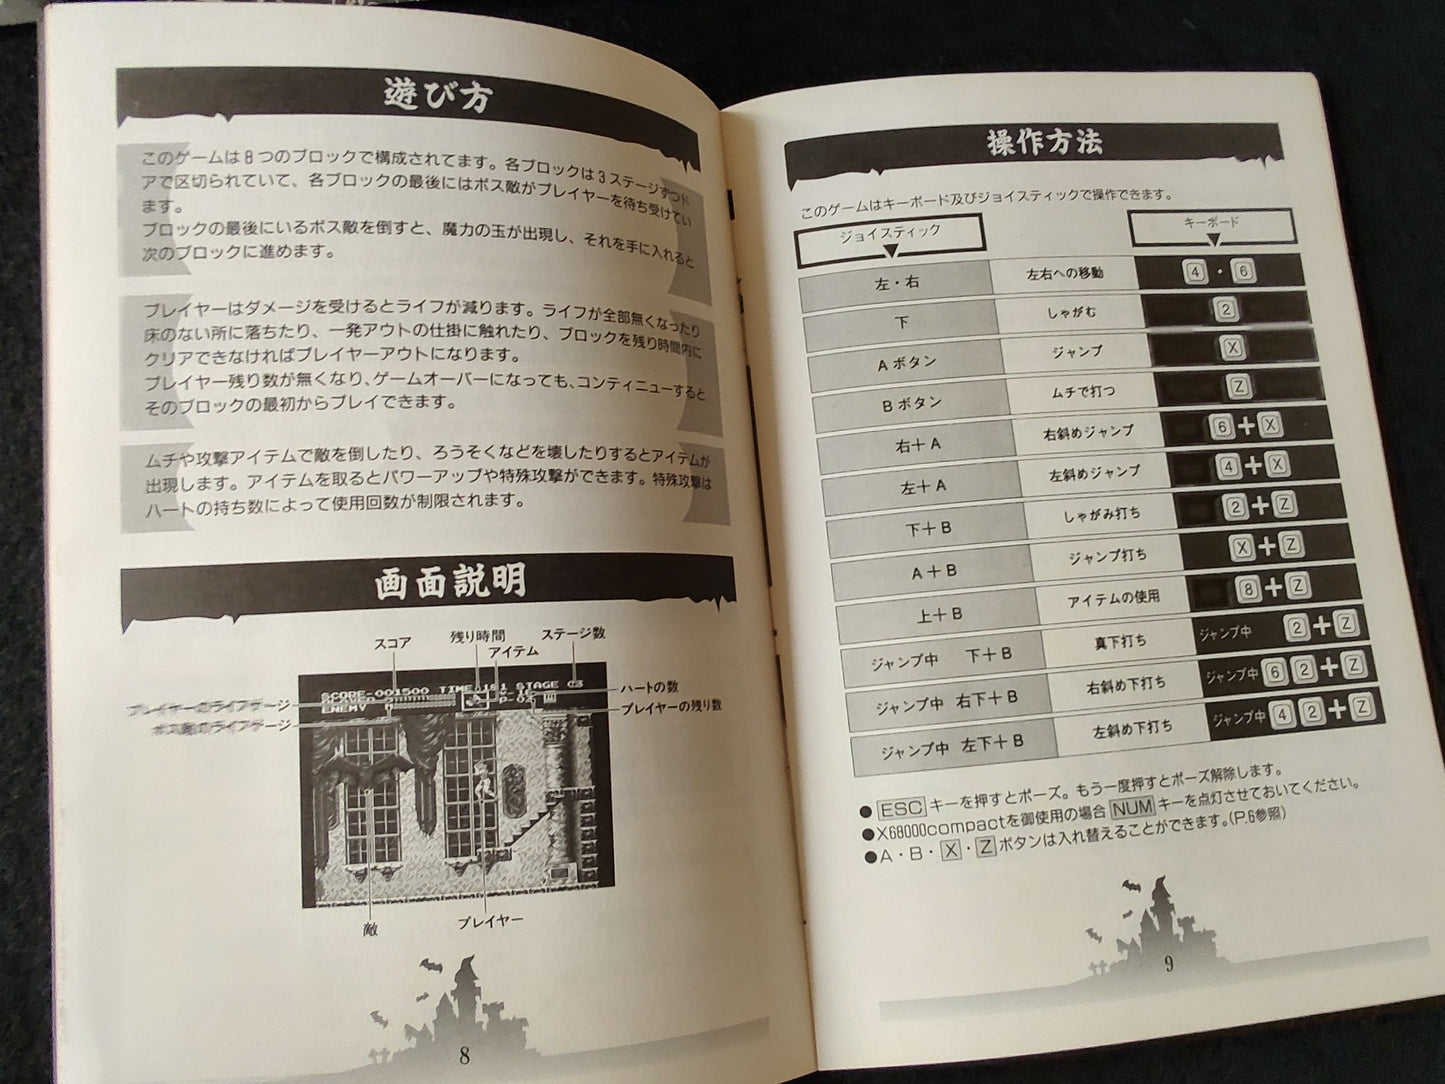 Castlevania SHARP X68000 Arcade Game Japan set/Gamedisk,manual,Box tested-f01013